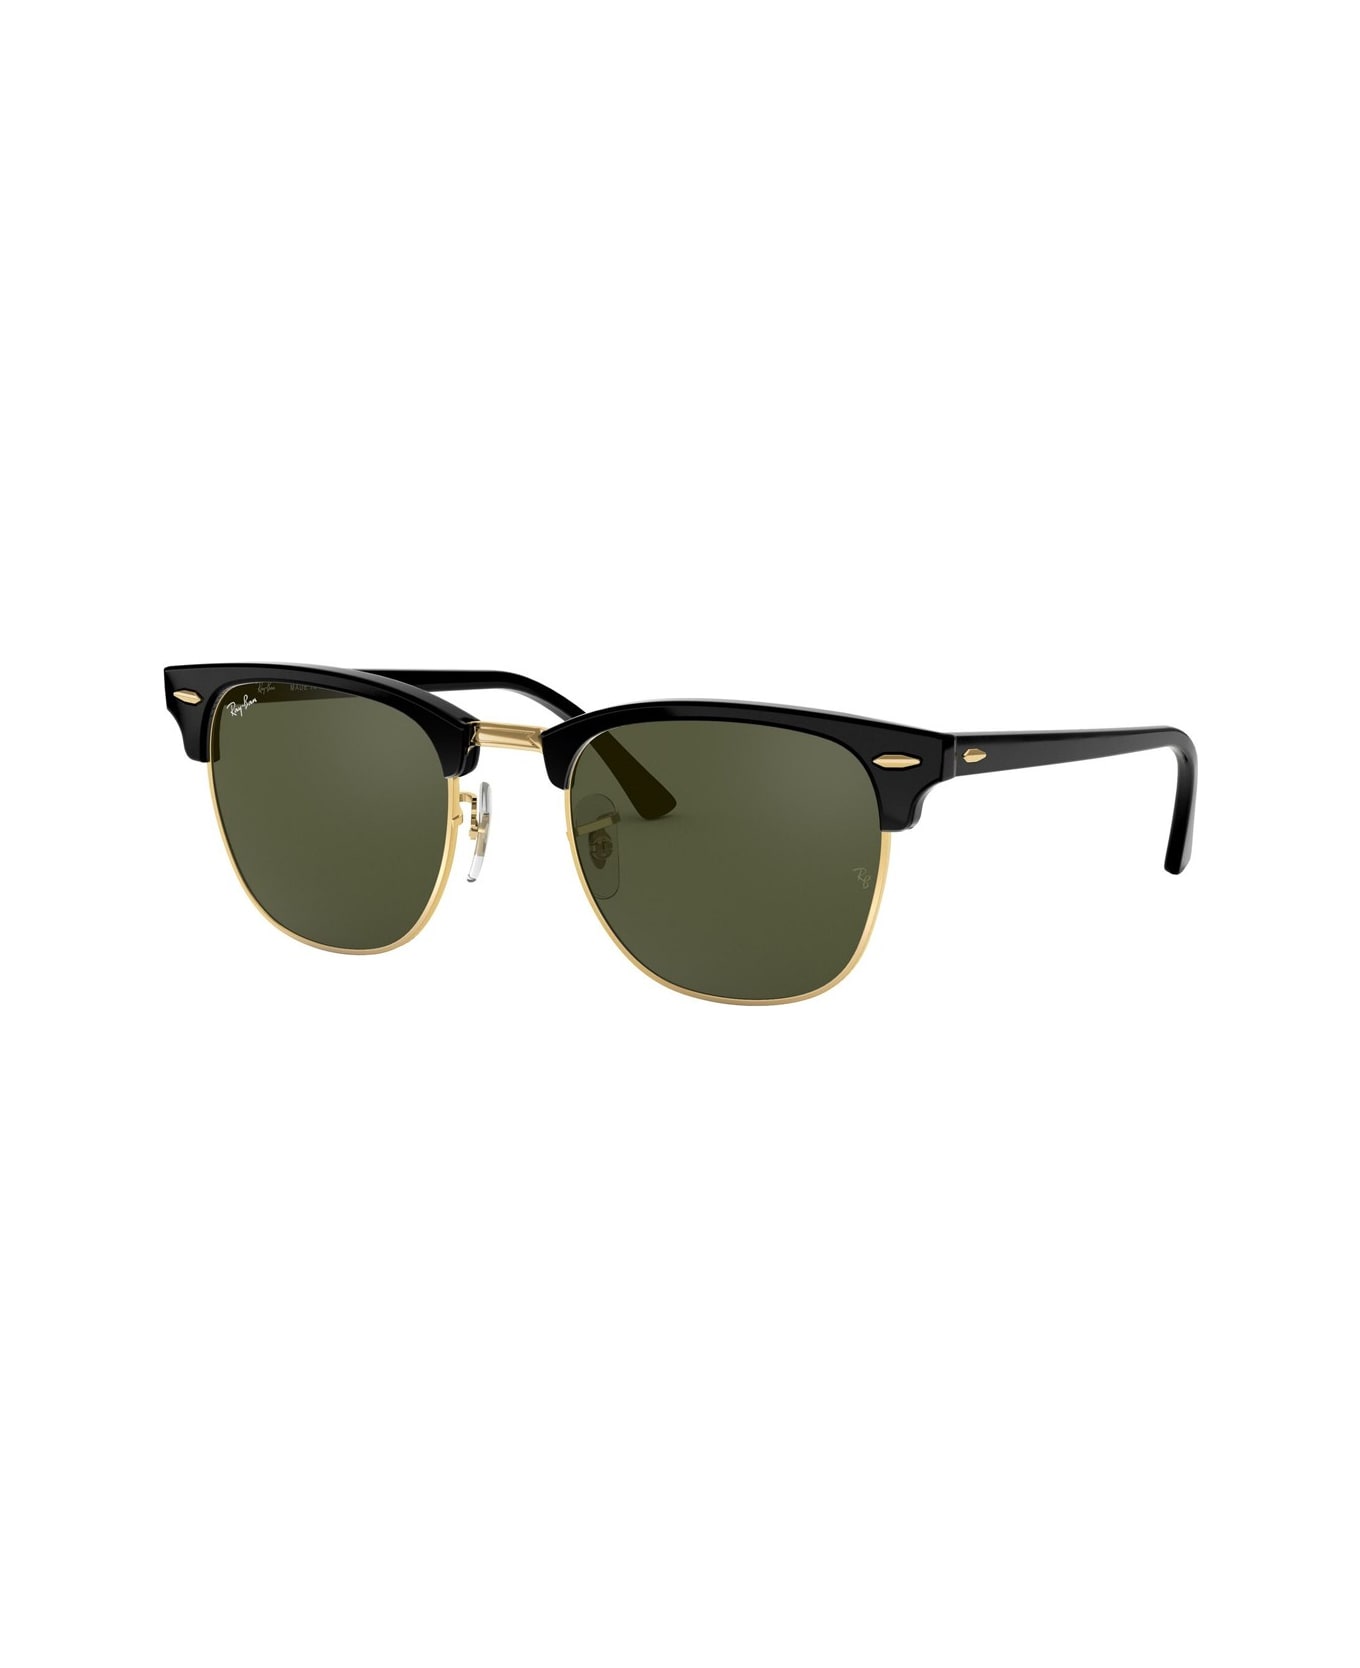 Ray-Ban Clubmaster Rb 3016 Sunglasses - Nero サングラス